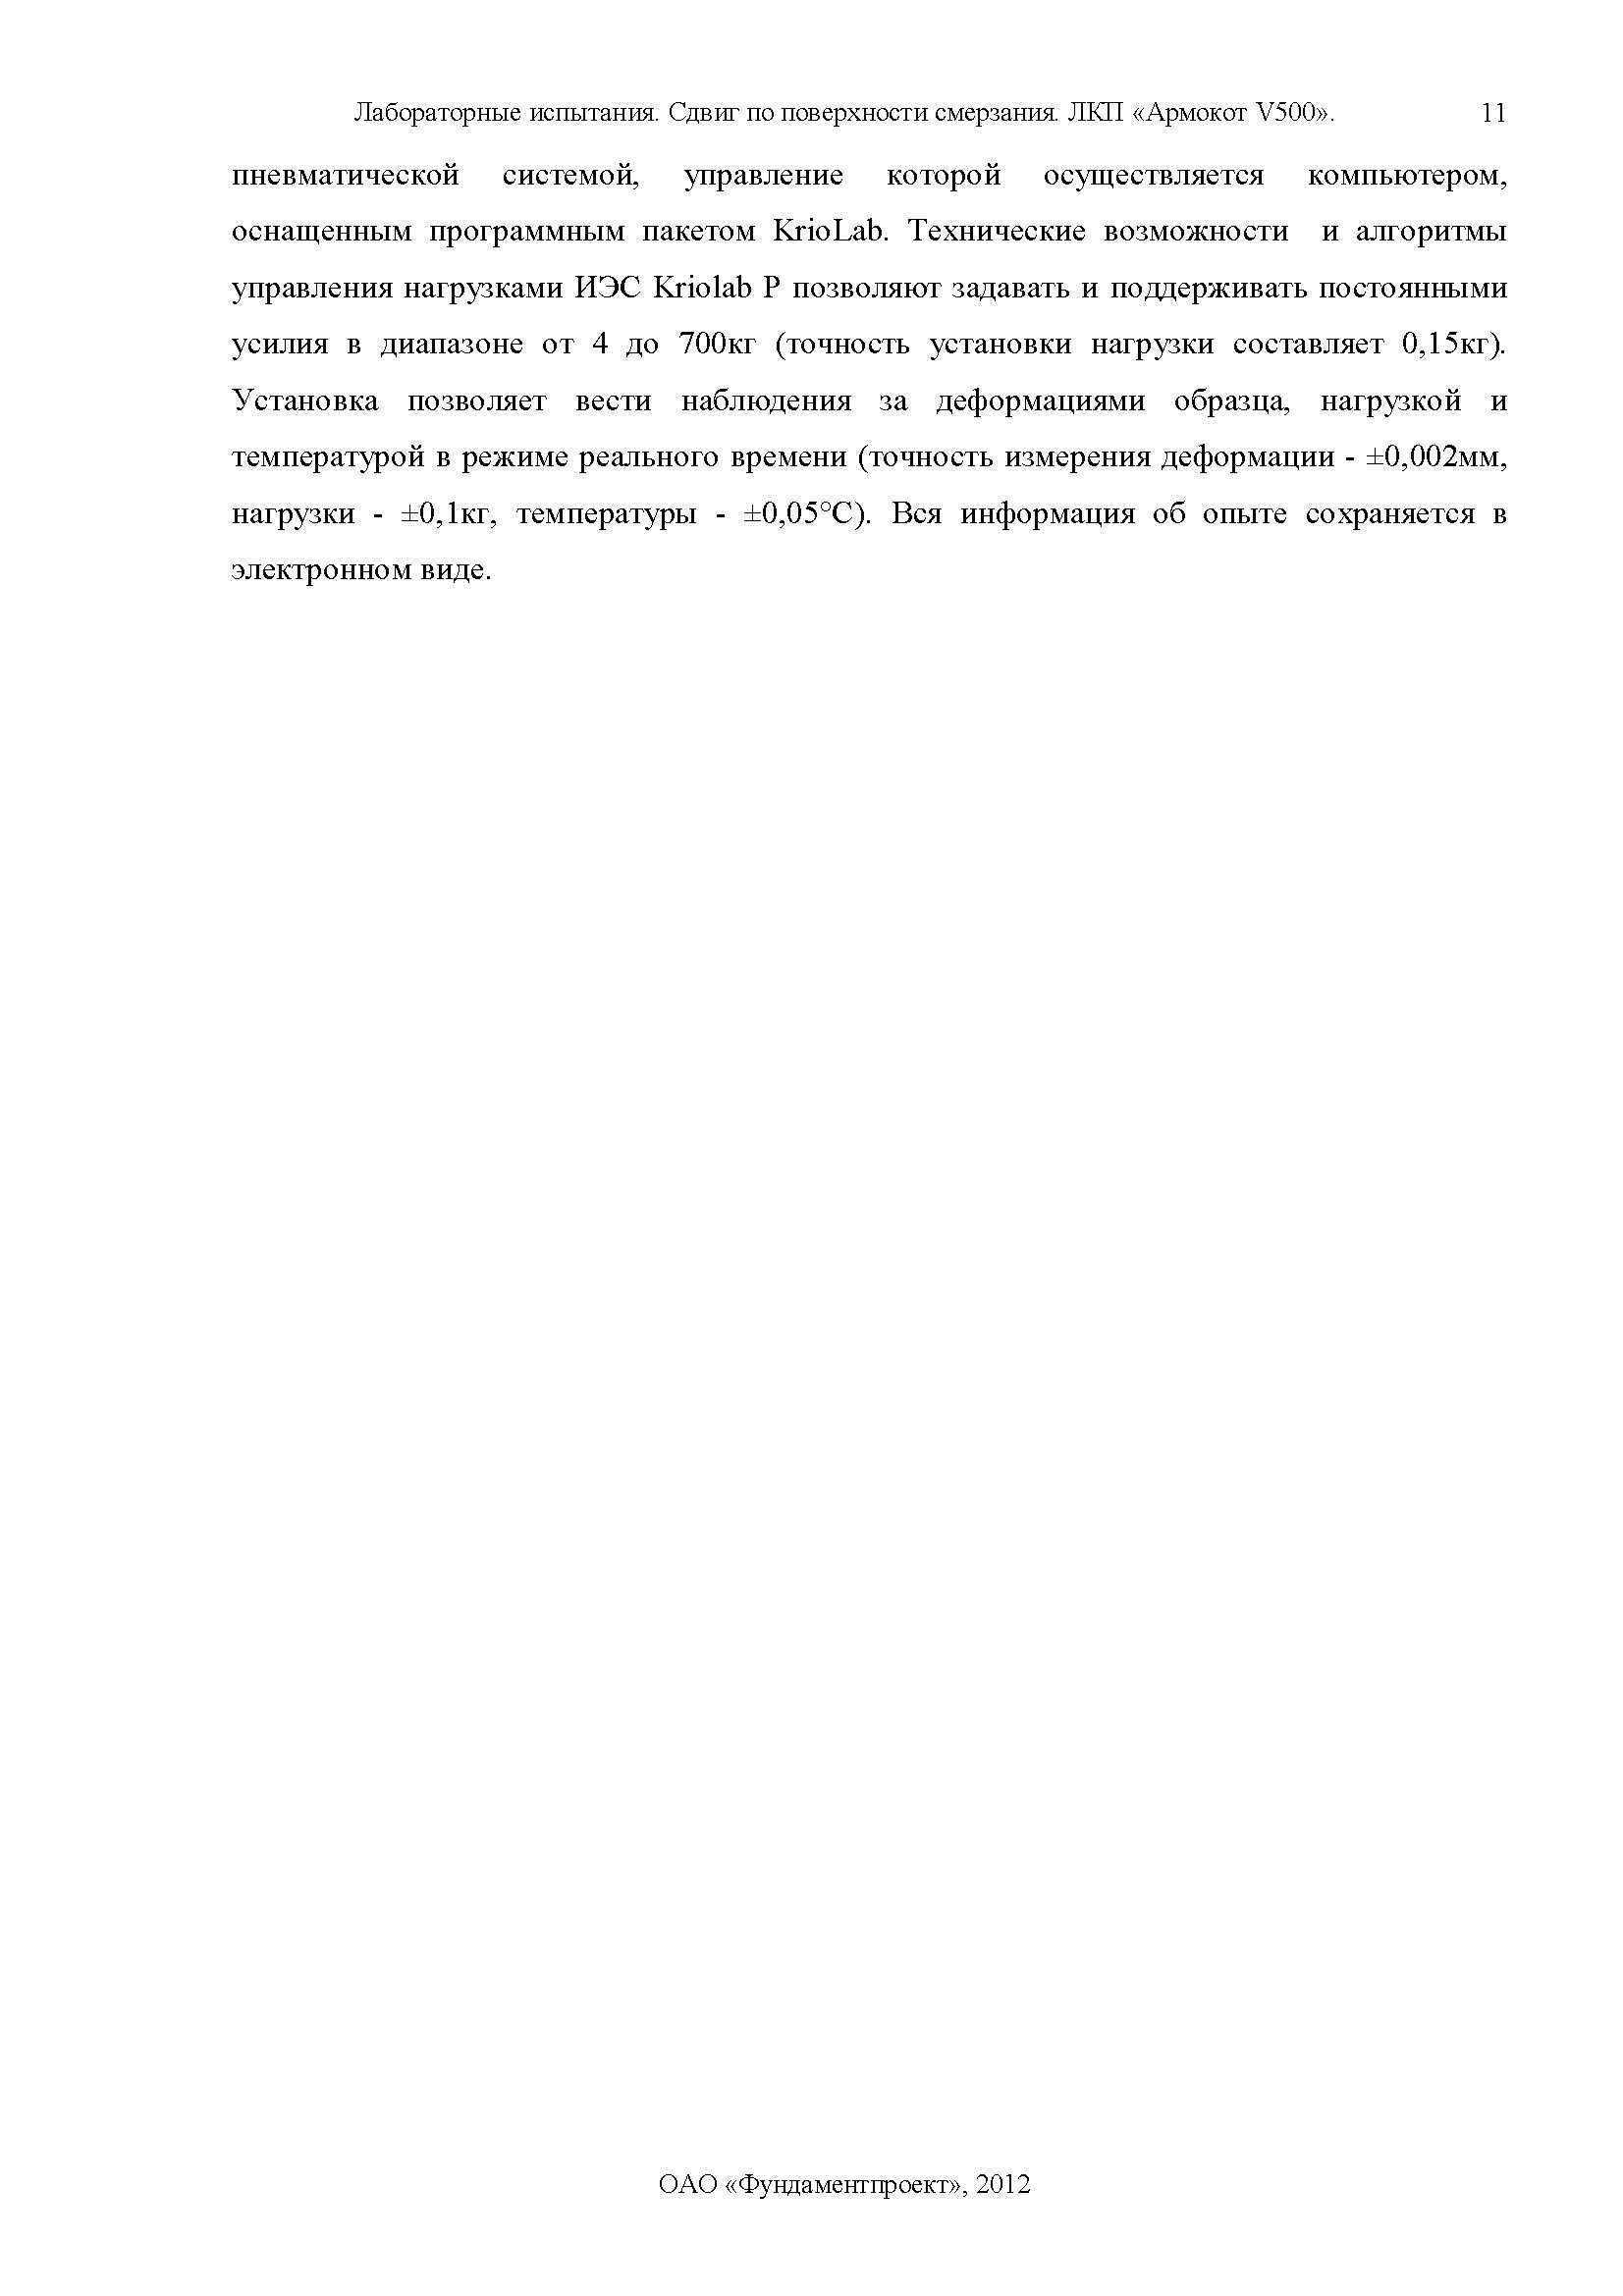 Отчет по сваям Армокот V500 Фундаментпроект_Страница_11